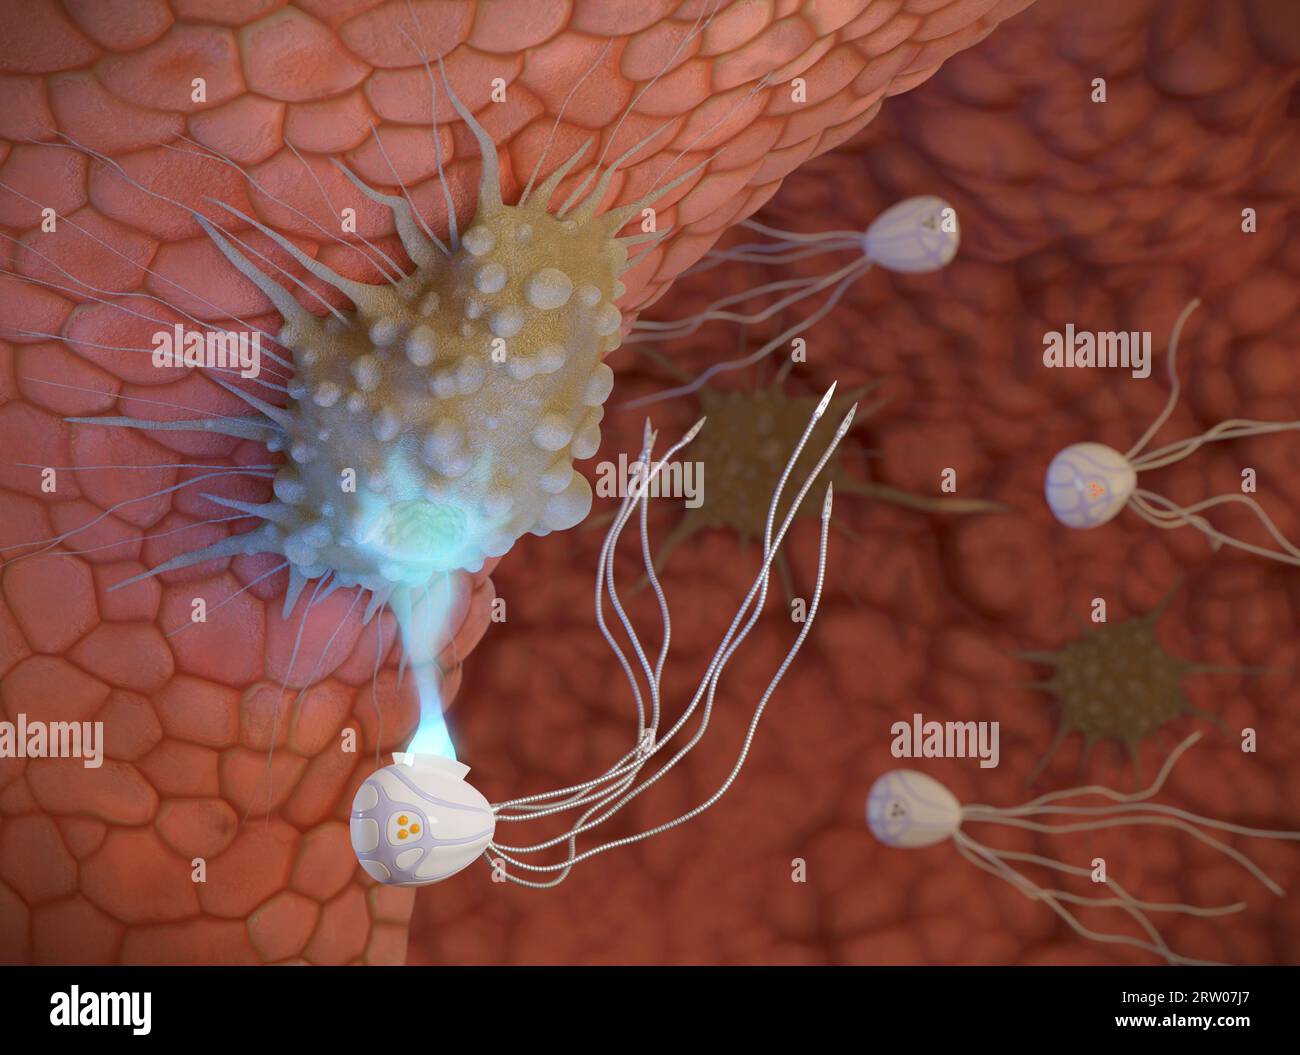 Medical nanobots delivering chemotherapy, illustration Stock Photo